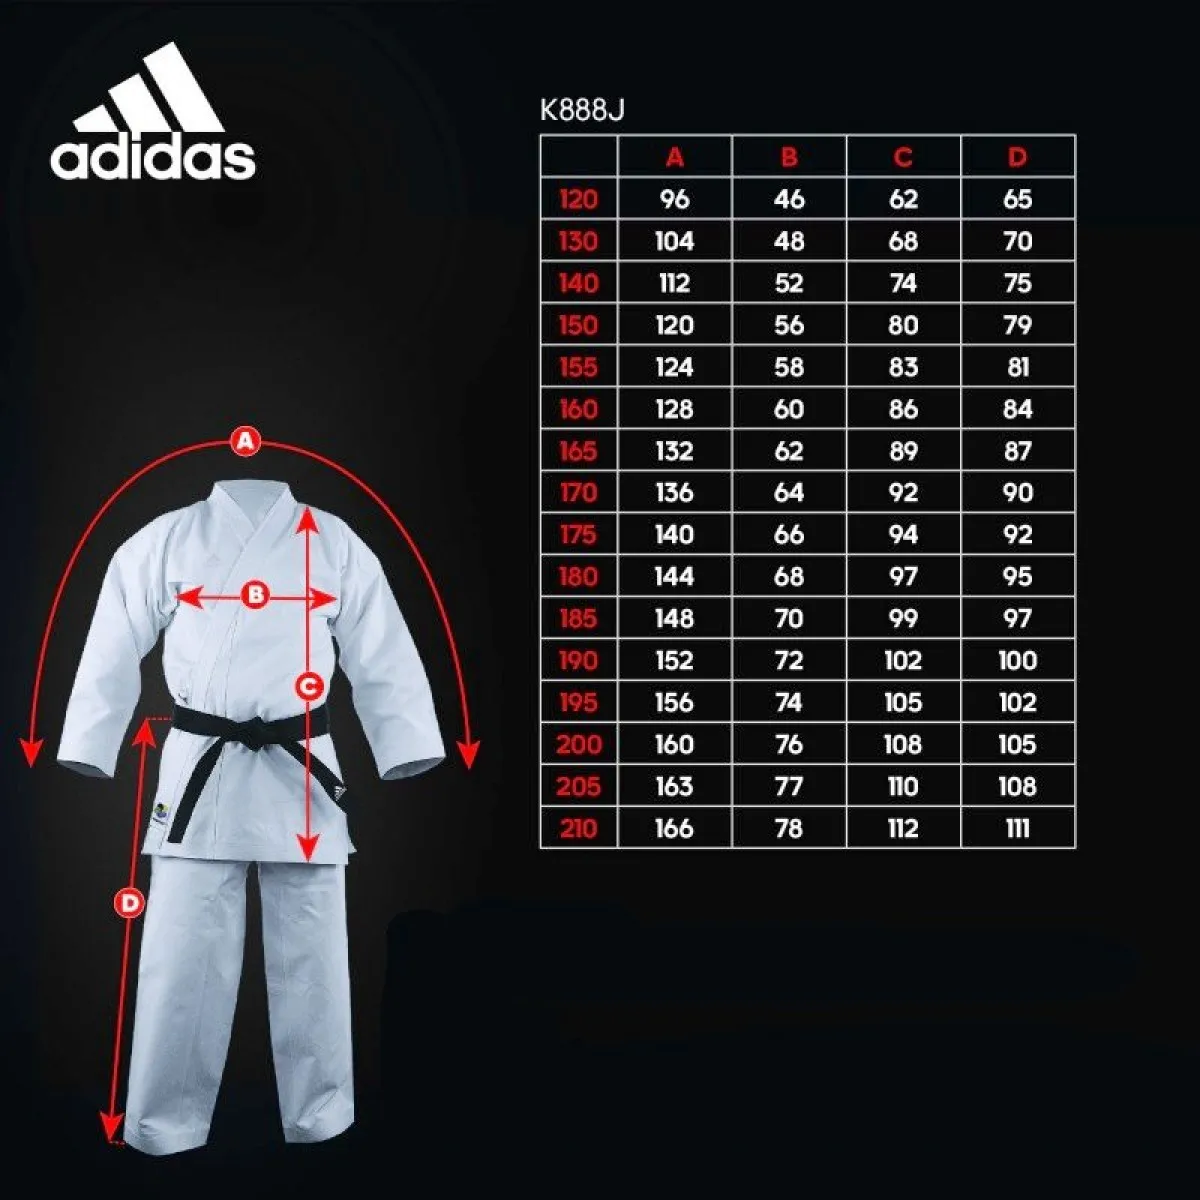 Adidas traje de karate Kata Kigai japonés